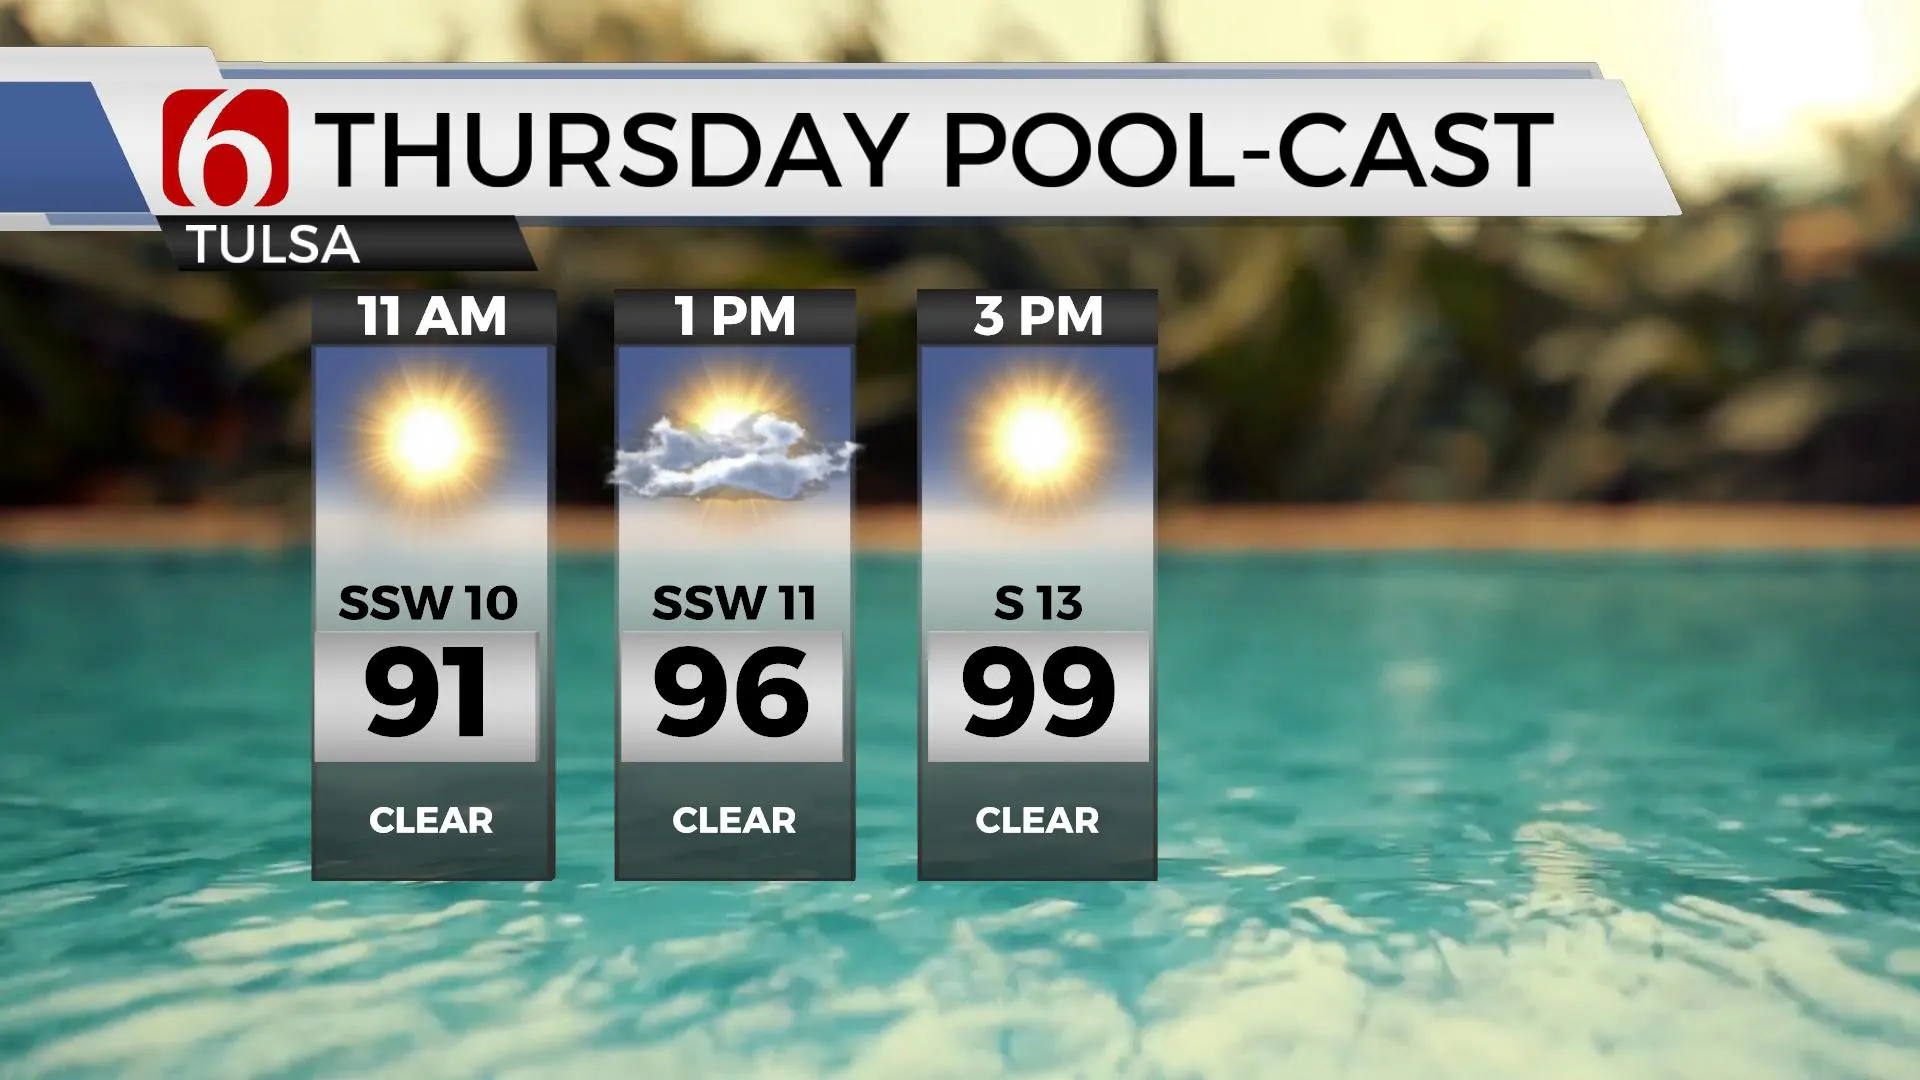 Thursday Pool-Cast